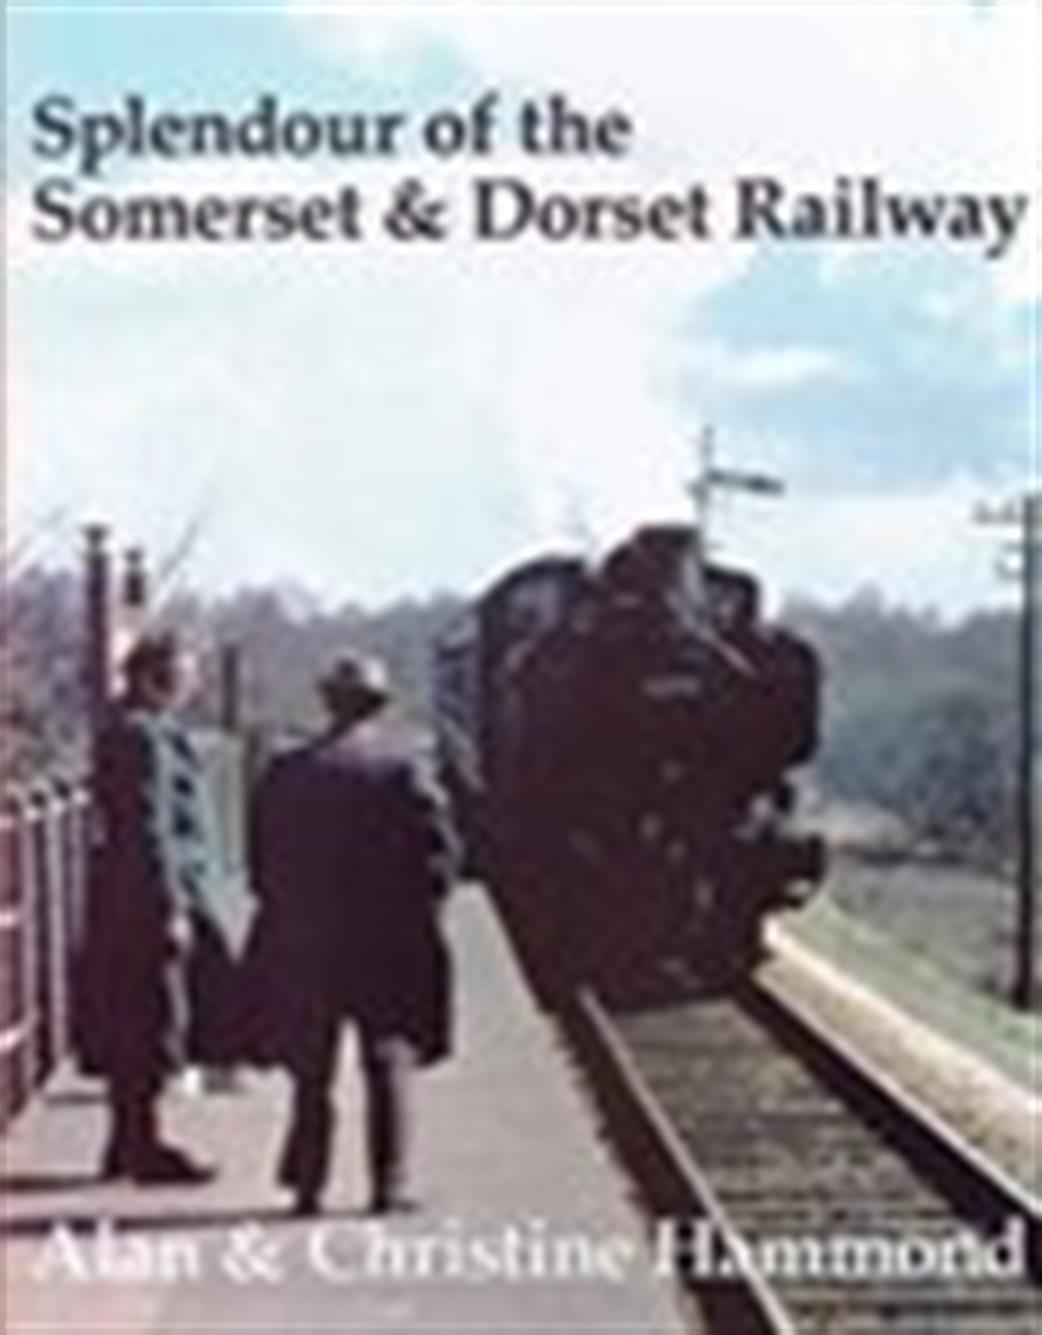 Ian Allan Publishing 9780948975905 Splendour of the Somerset & Dorset Railway by Alan & Christine Hammond